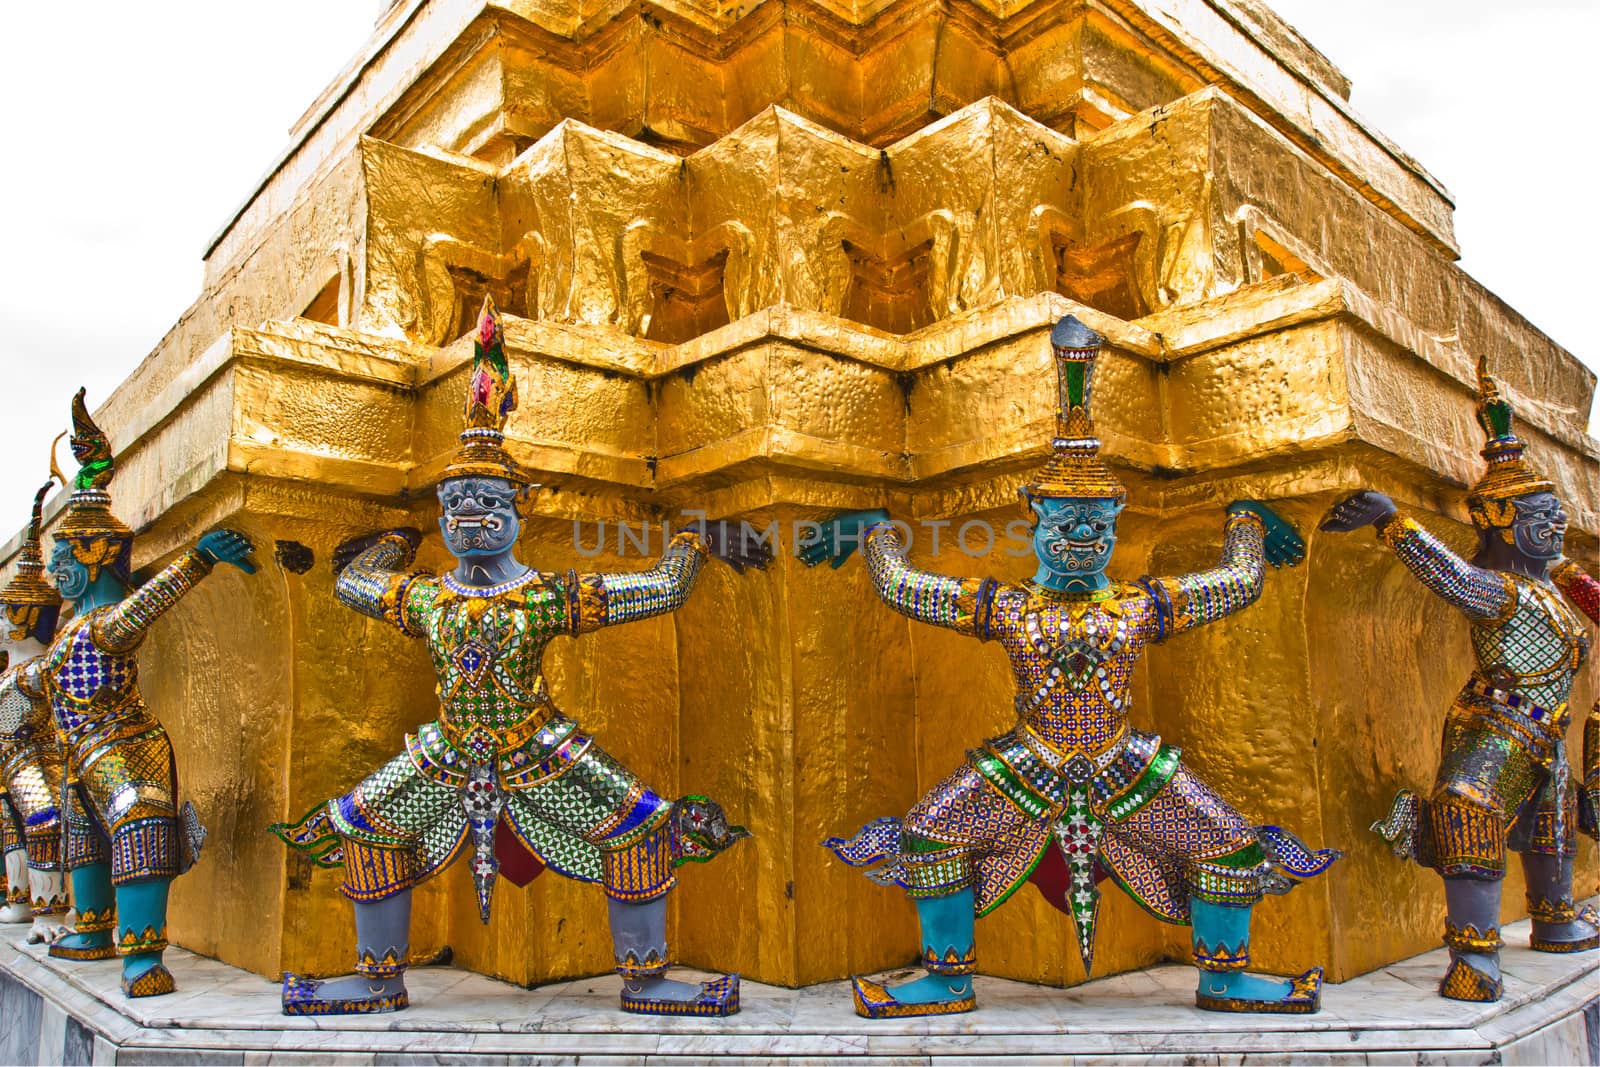 The figure giants and monkeys, representing the bearer of stupa.